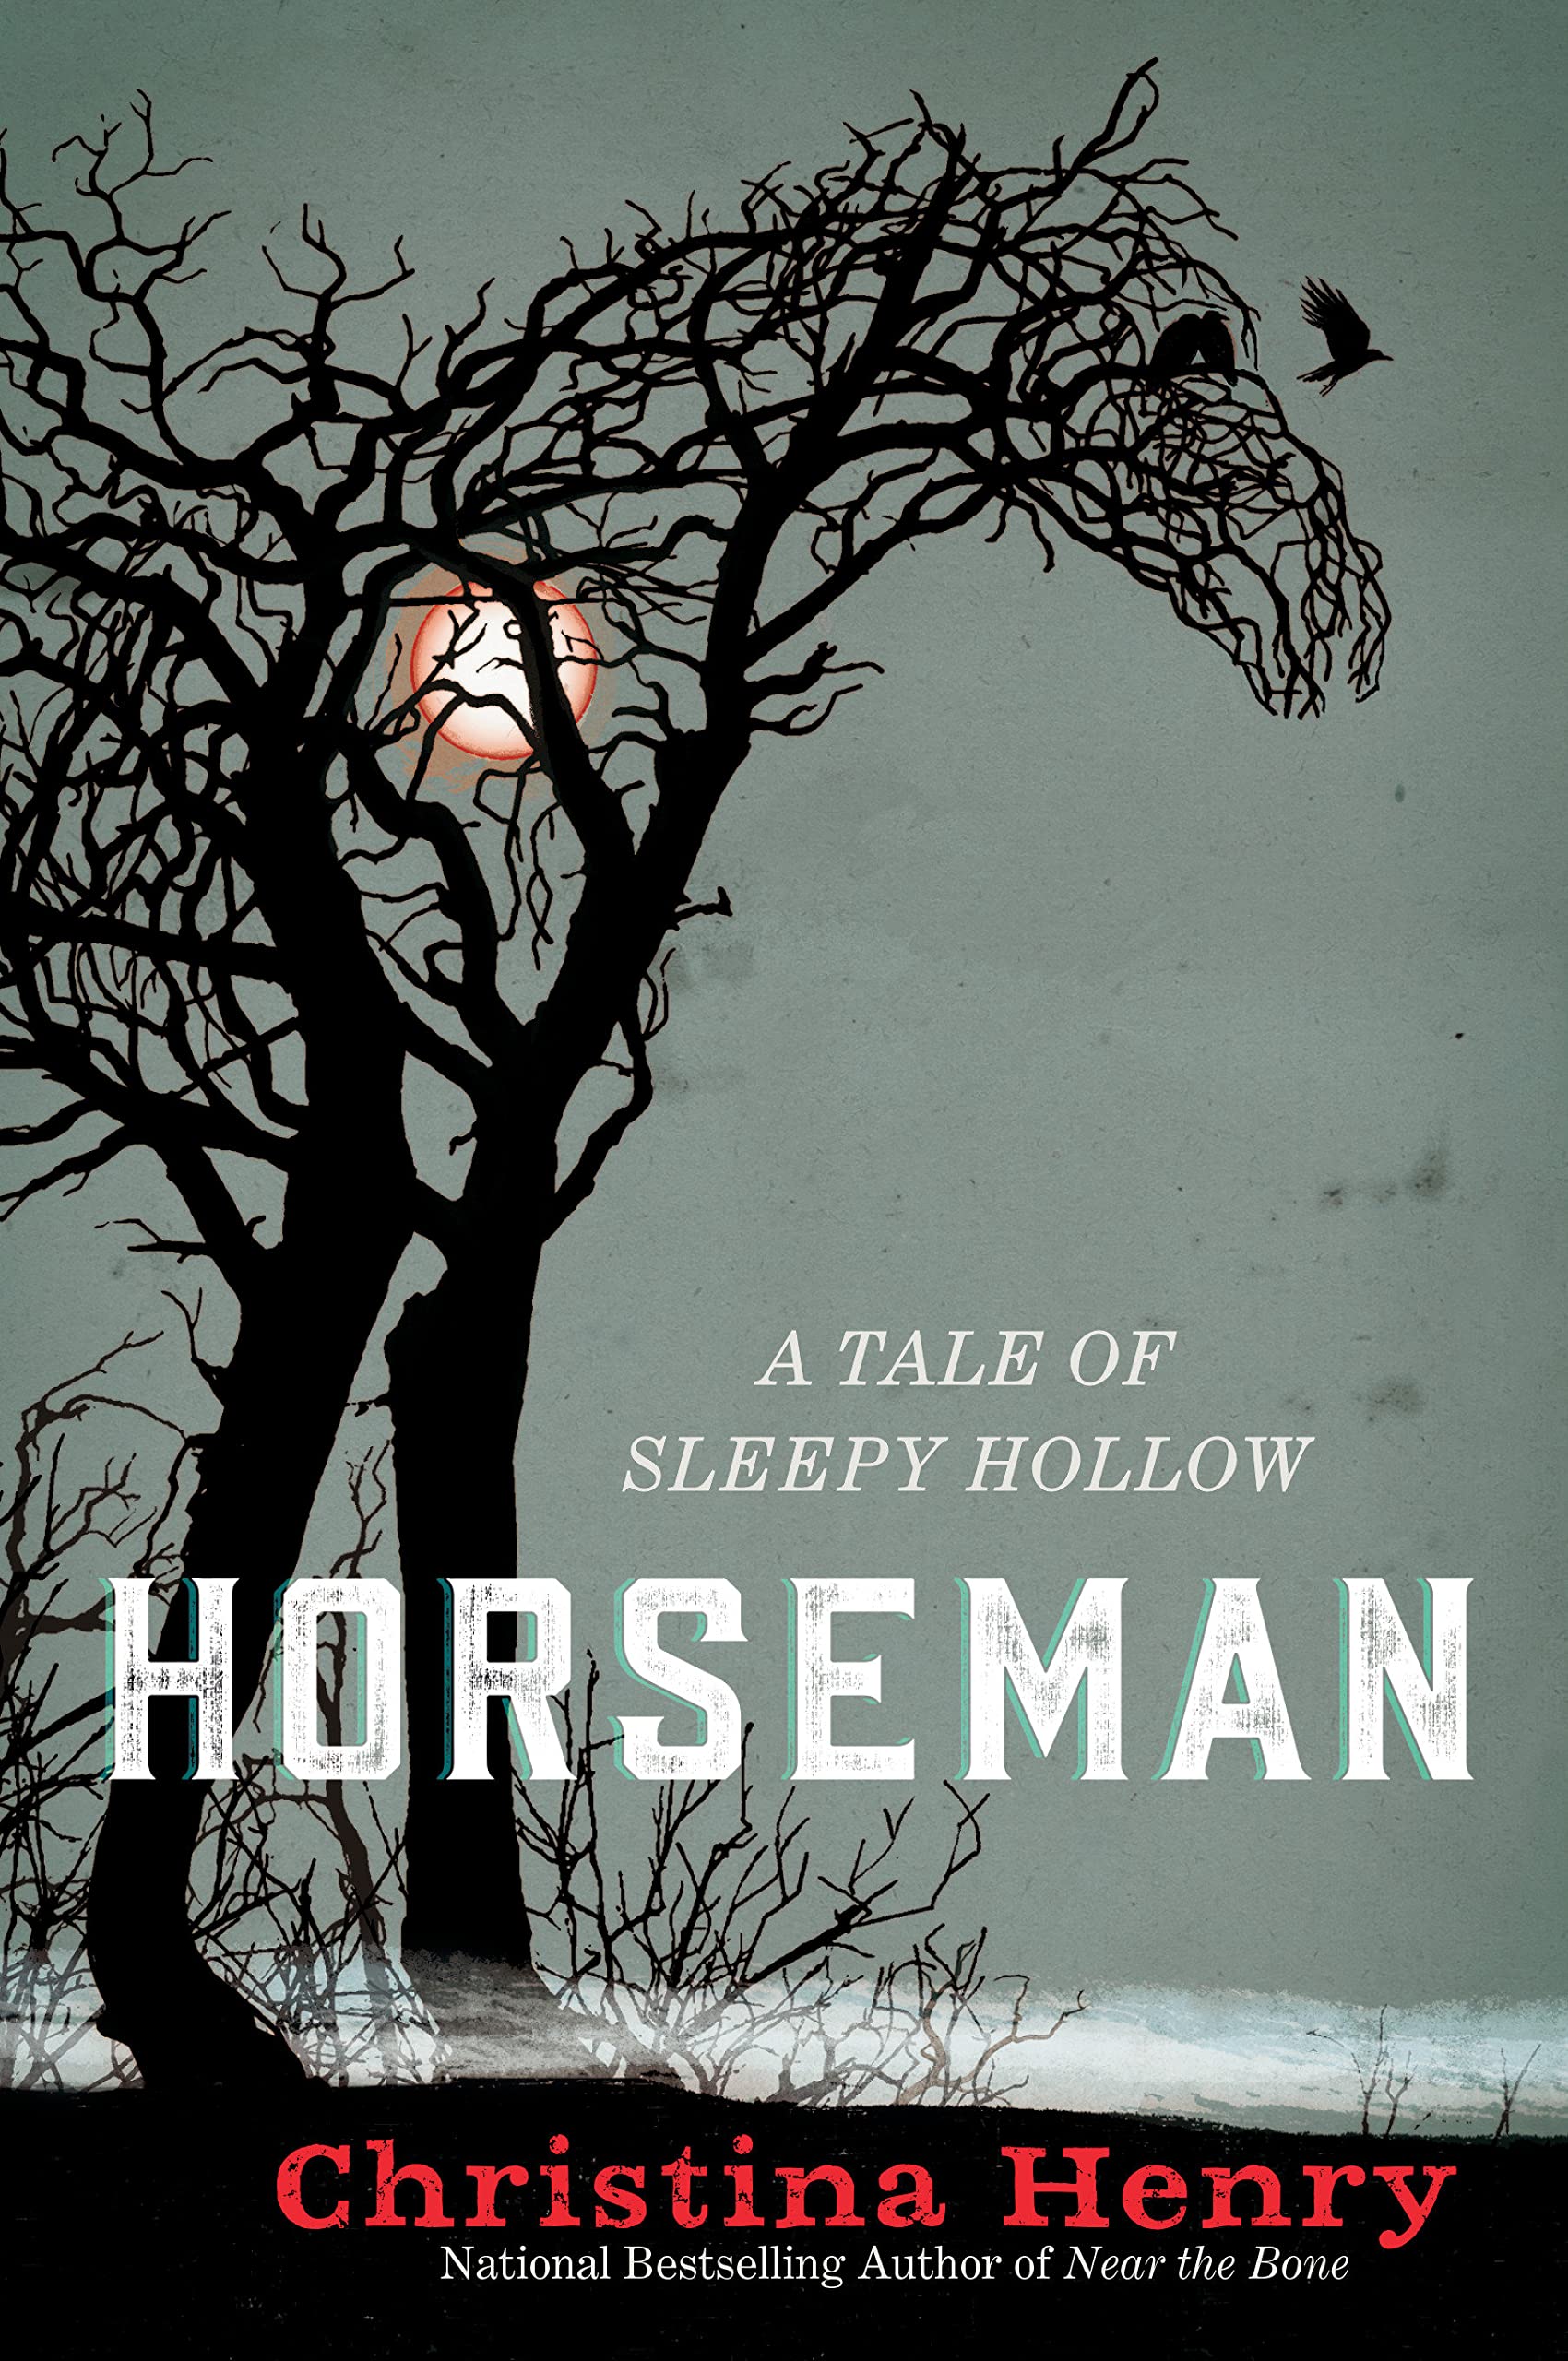 Horseman In Forest Dark Night Wallpapers